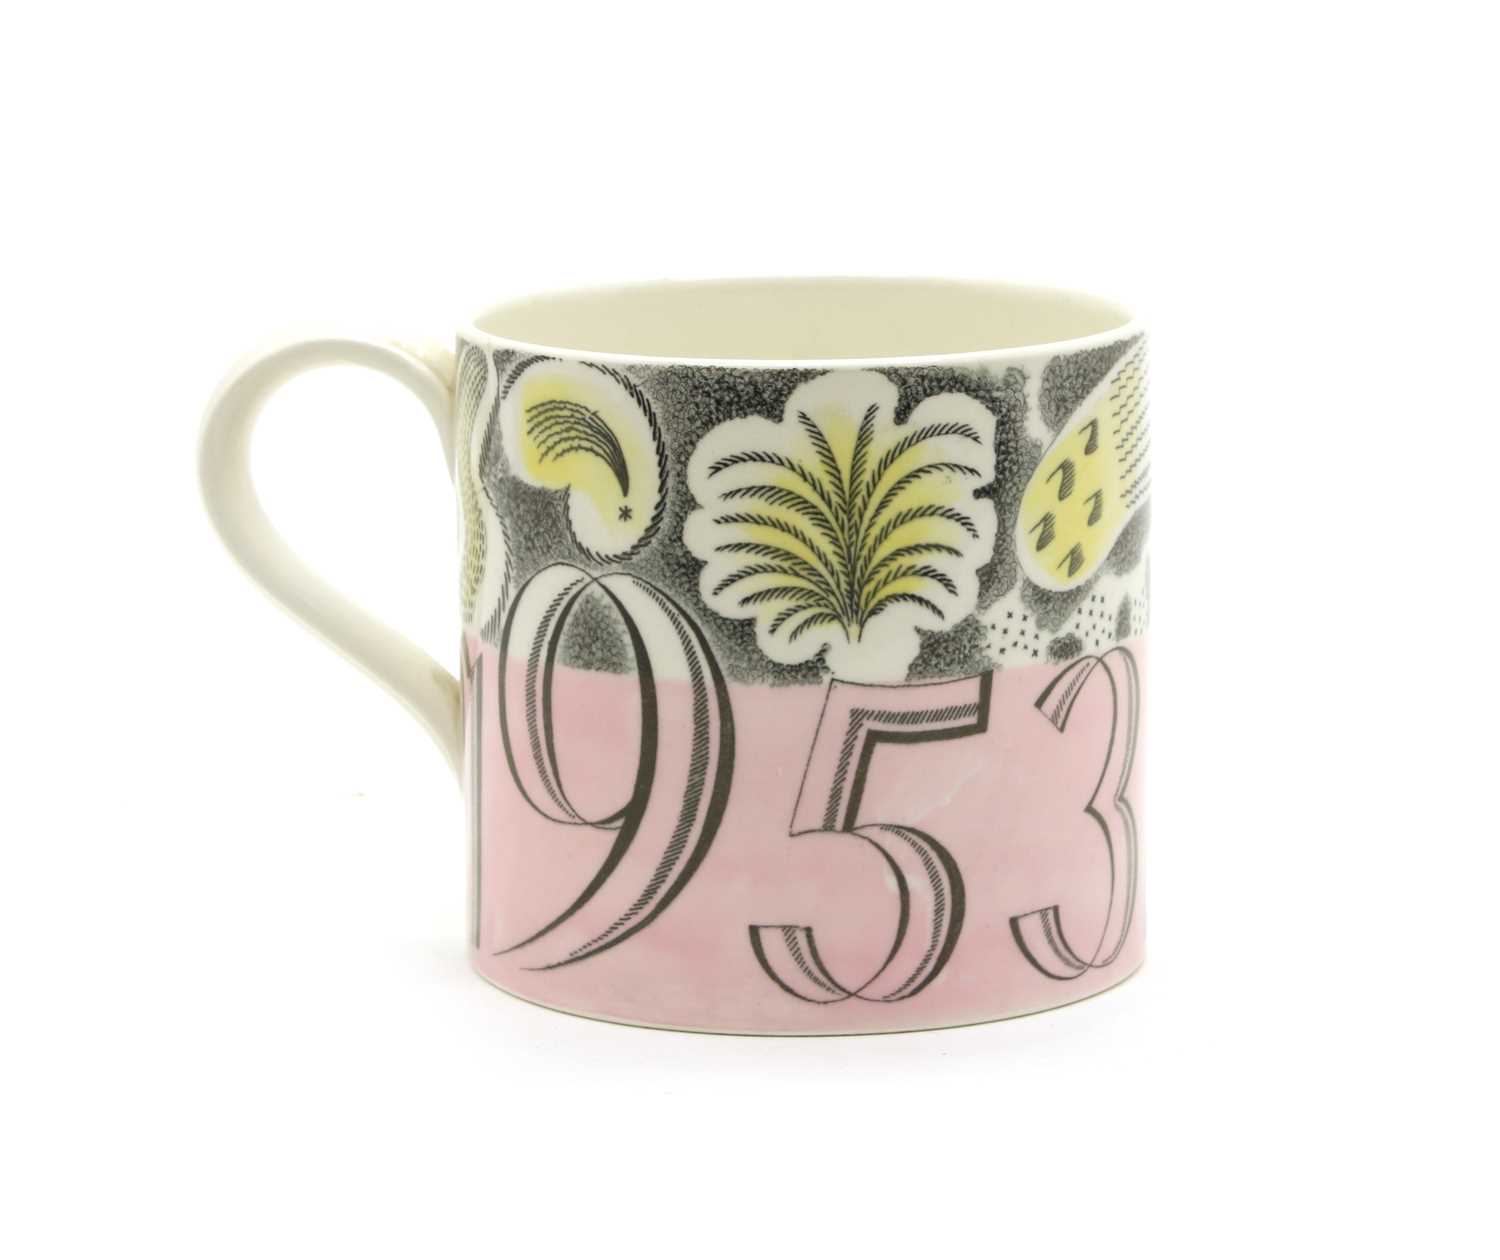 A Wedgwood Elizabeth II coronation mug,